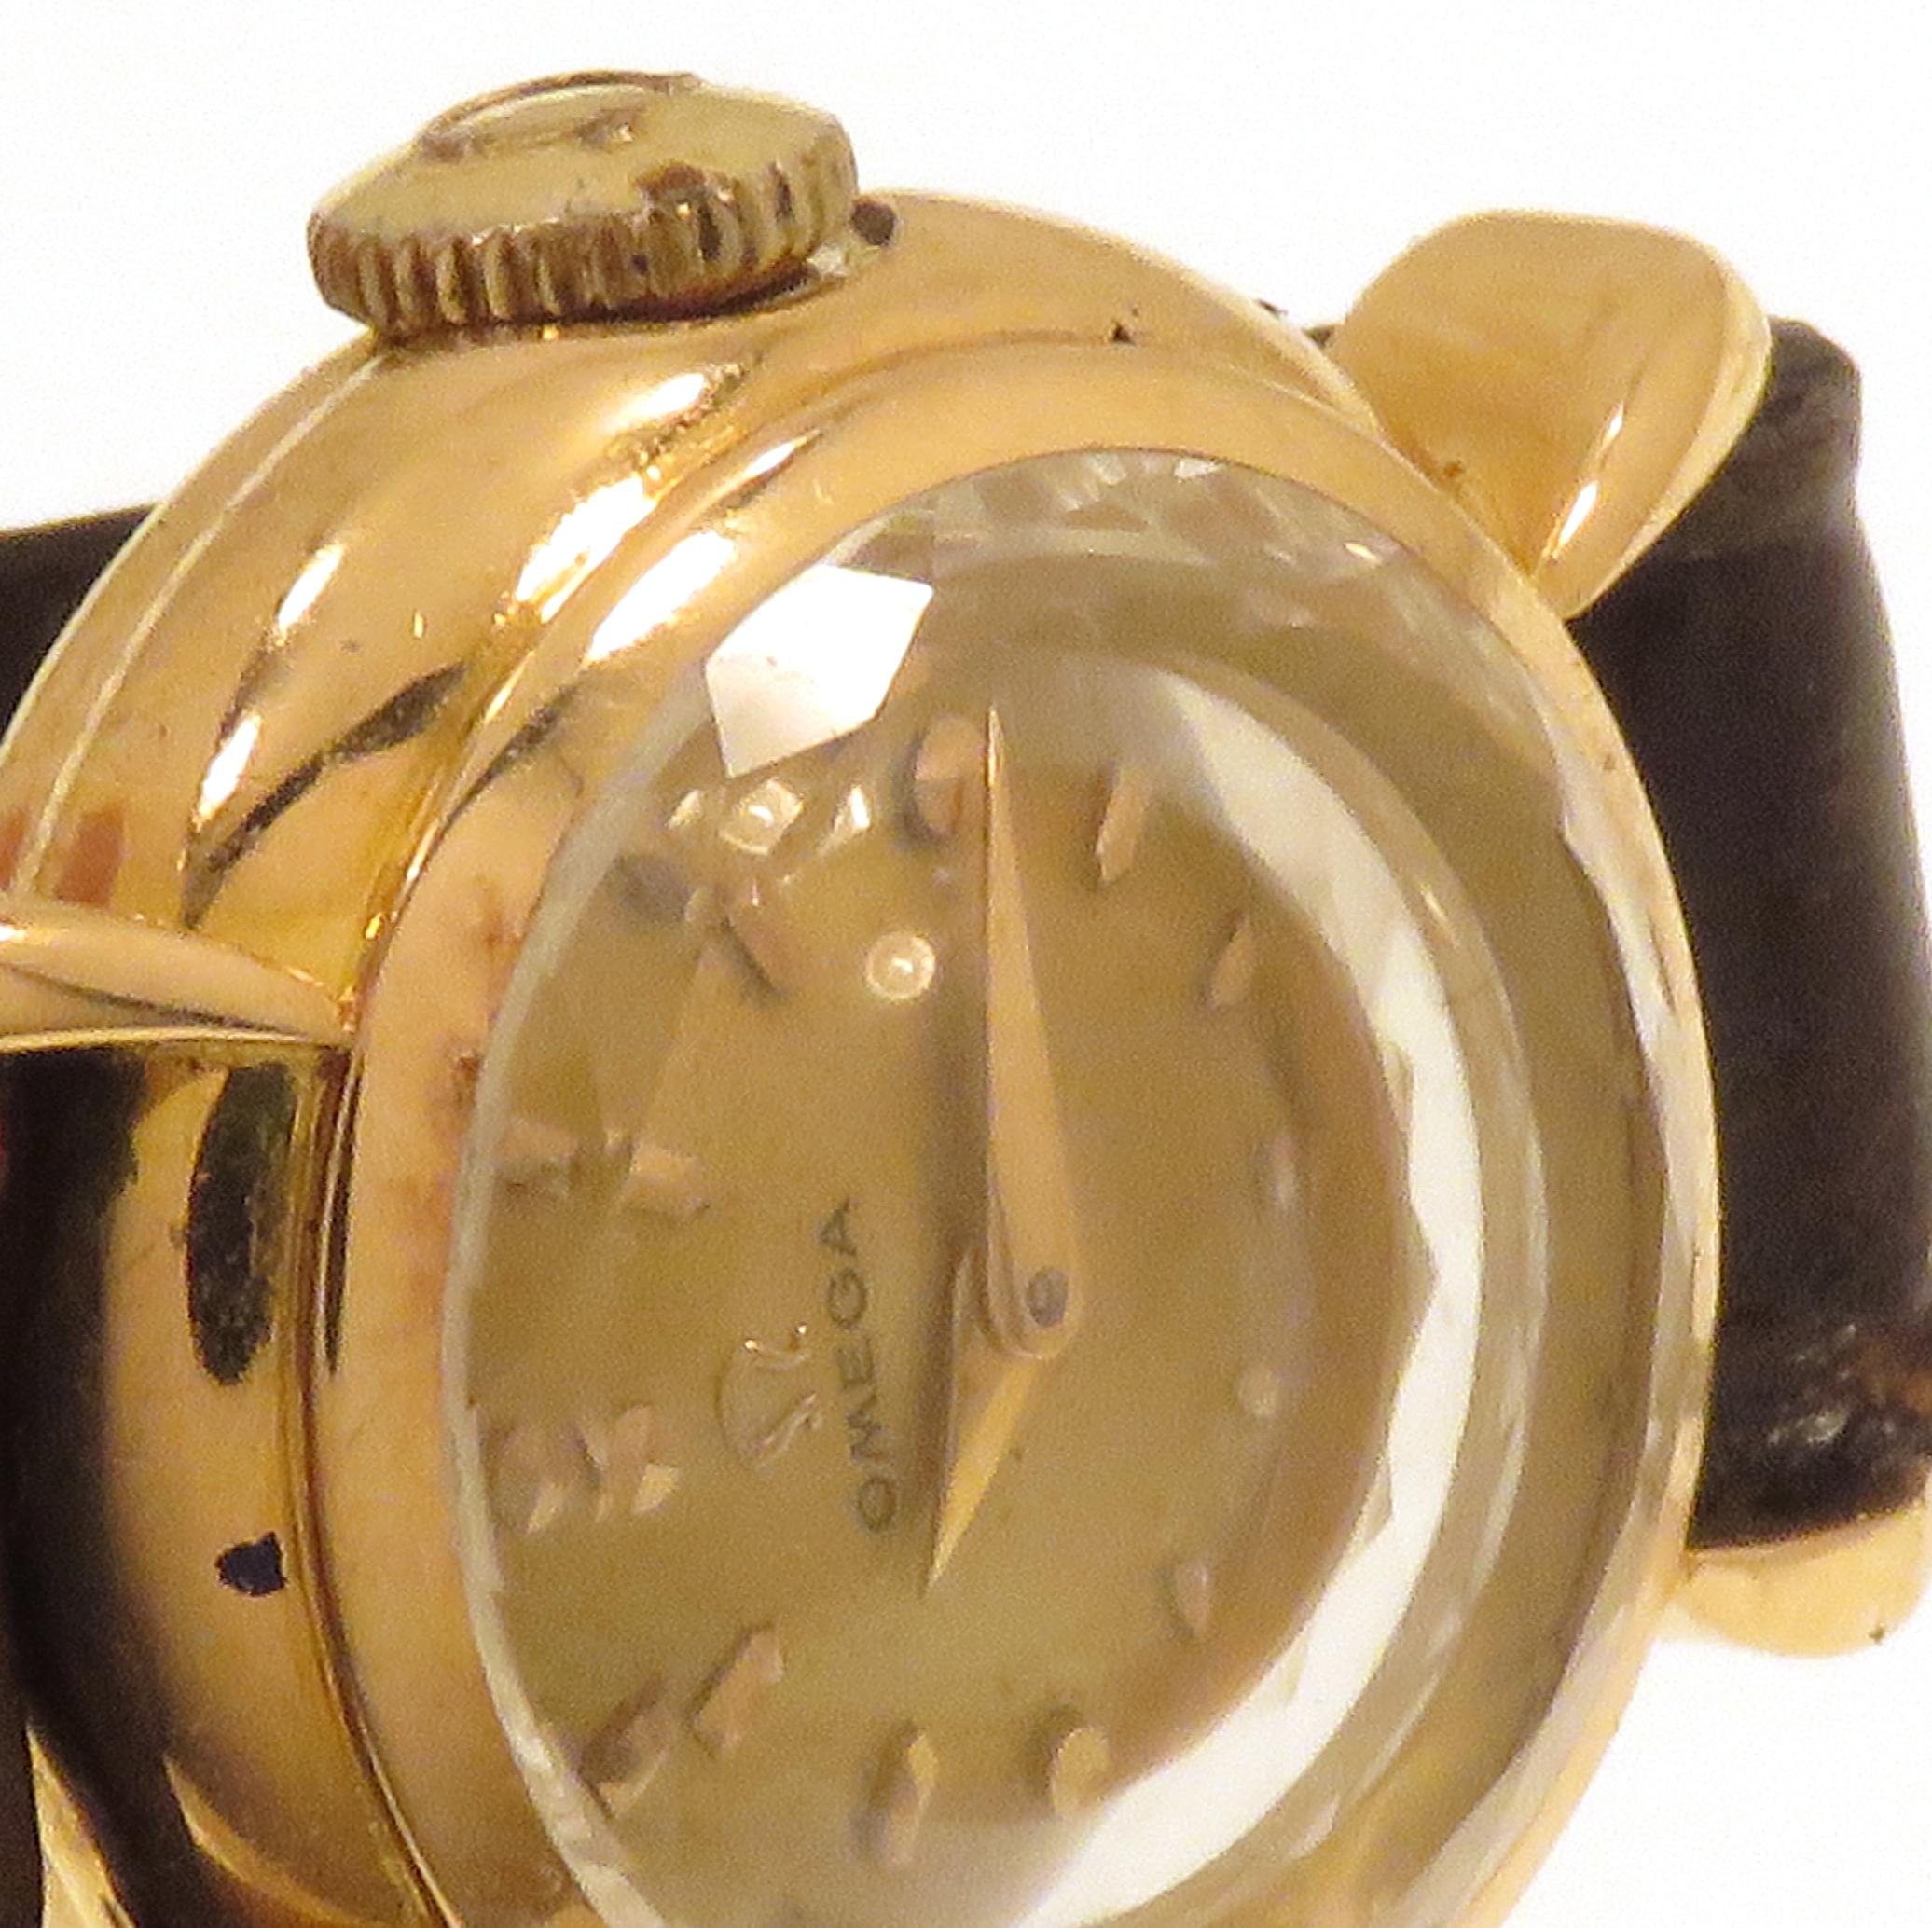 Retro Omega Women's 1950 Gold Wrist Watch For Sale